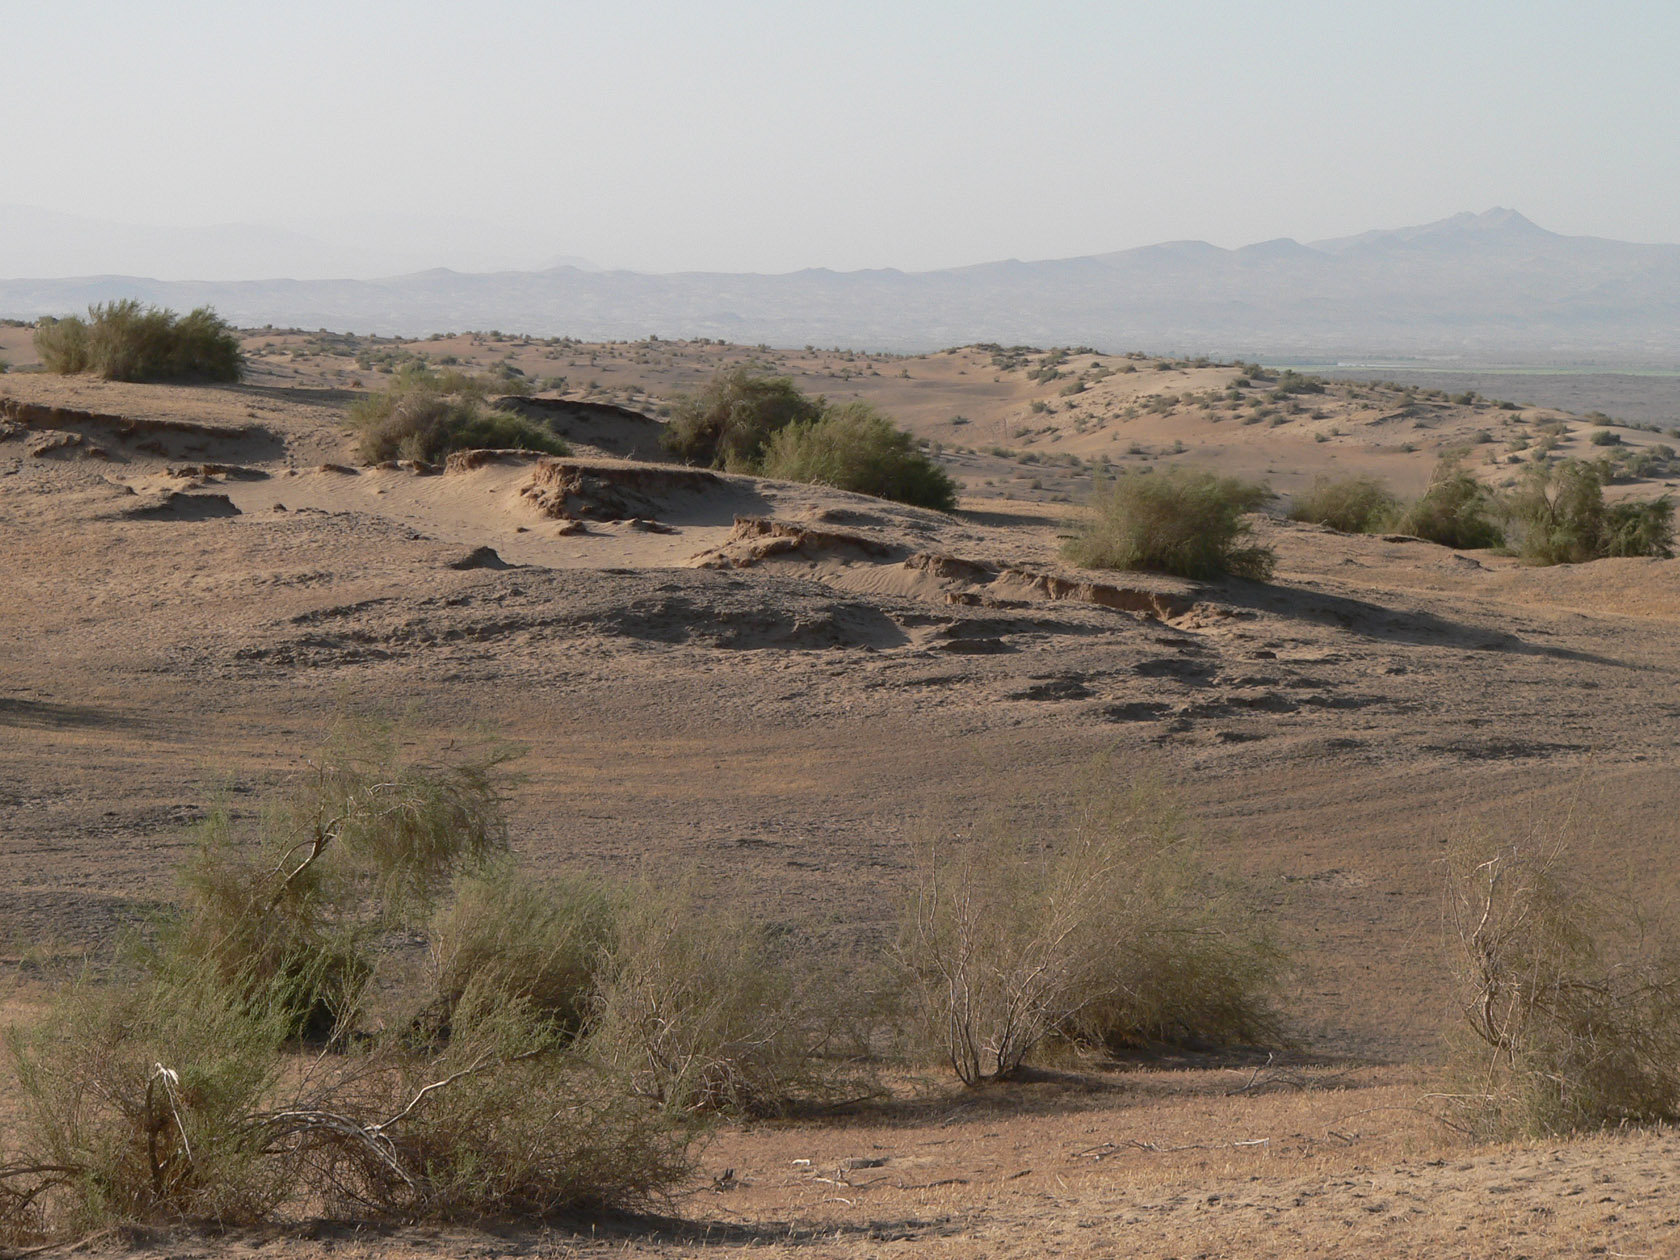 Курджалакум, image of landscape/habitat.